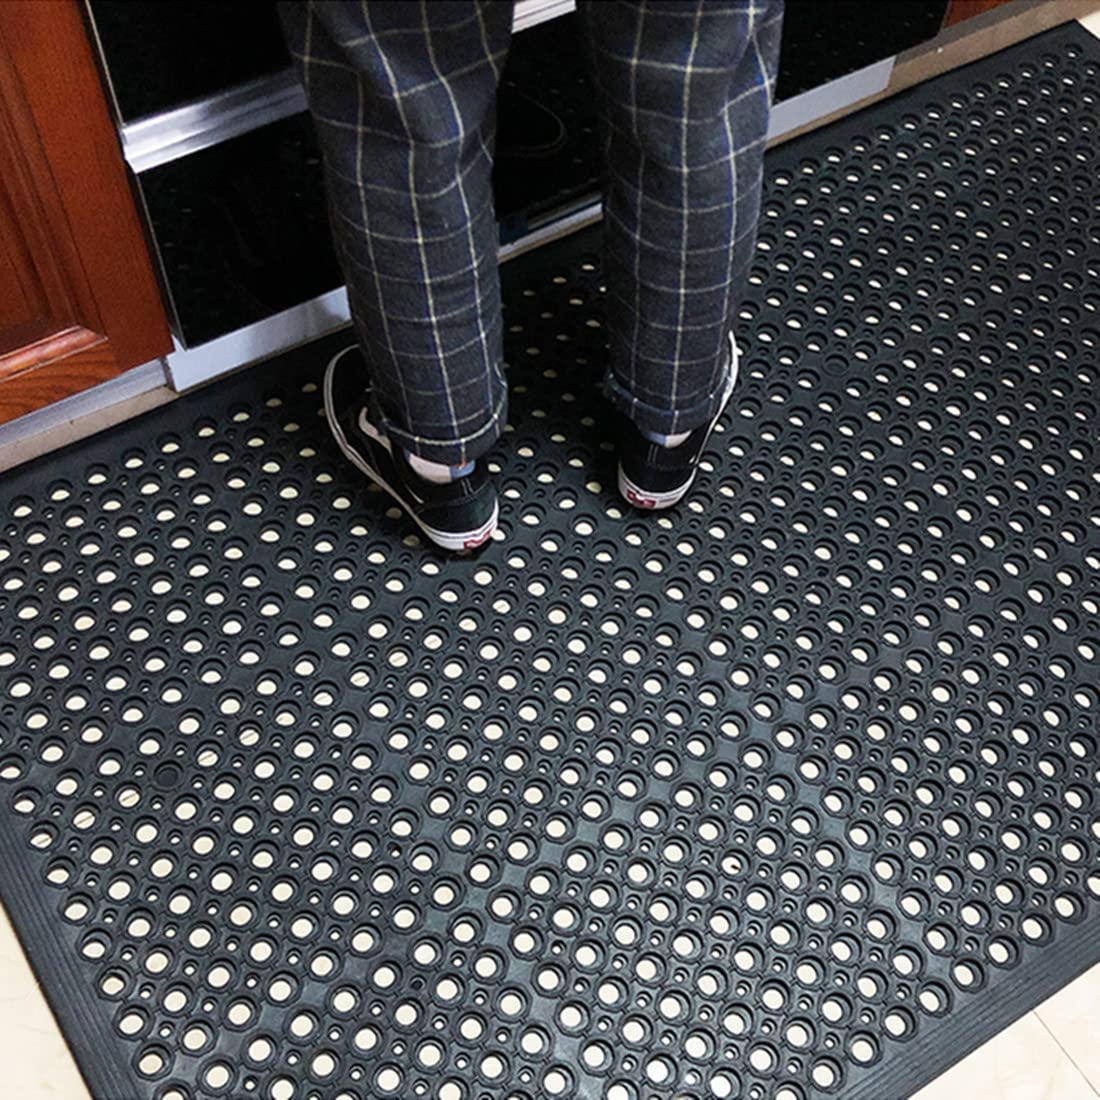 smabee Anti-Fatigue Non-Slip Rubber Floor Mat Heavy Duty Mats 36x60 for Outdoor Restaurant Kitchen Bar